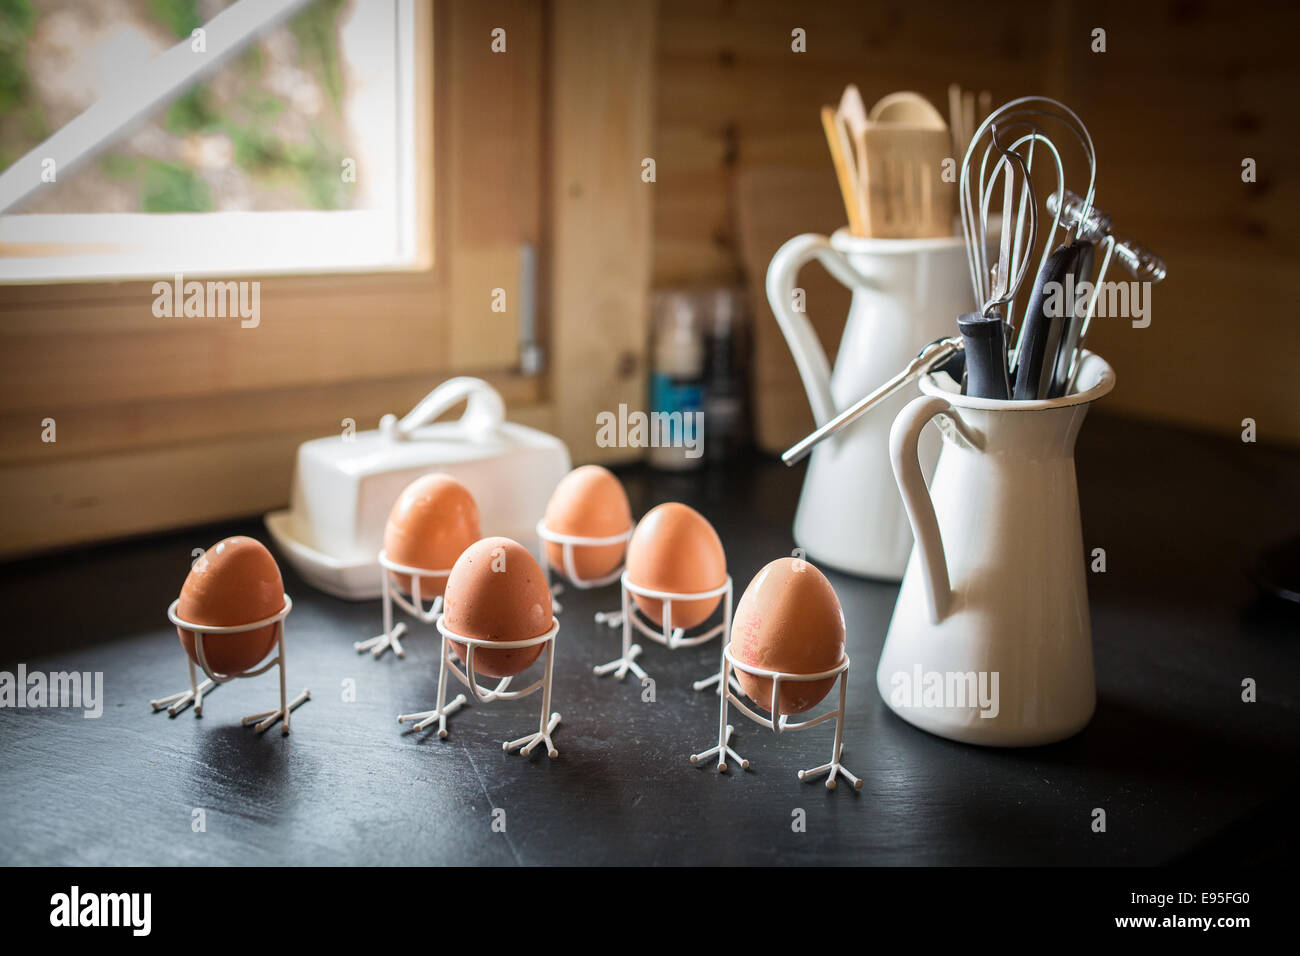 Eggs and kitchen utensils on kitchen worktop Stock Photo